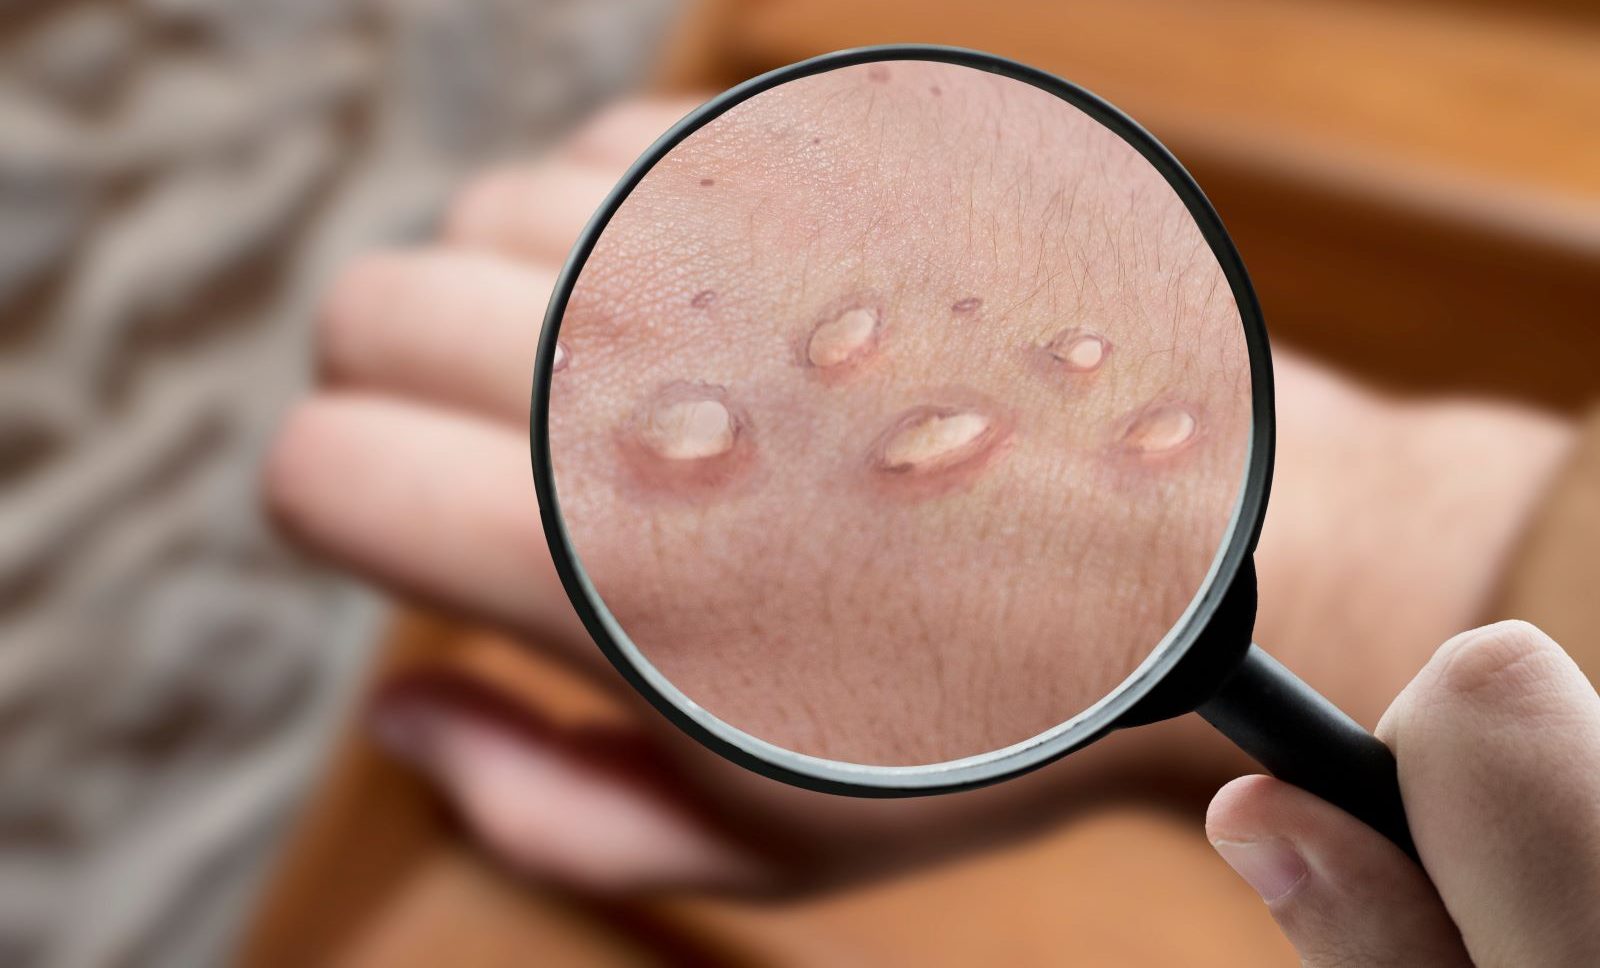 Monkeypox rash shown through a magnifying glass.